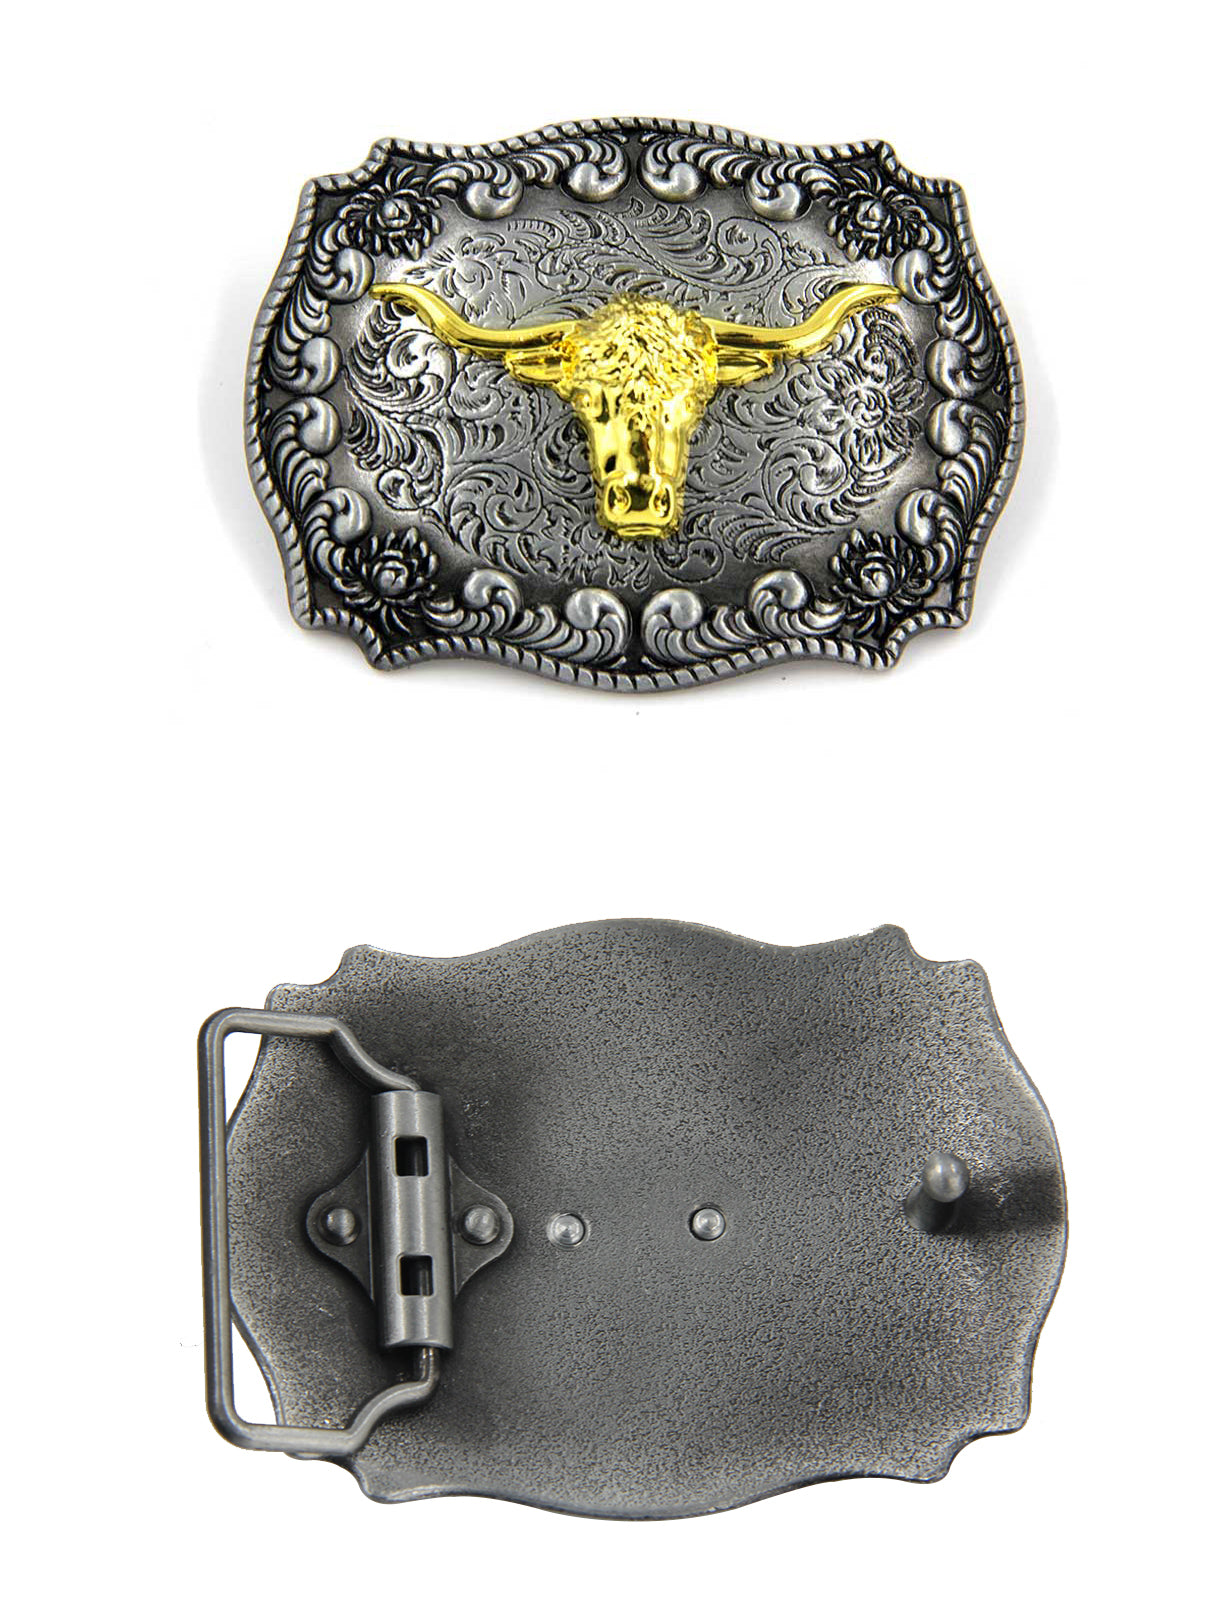 TOPACC Texas Longhorn Bull Buckle Bronze/Two Tone